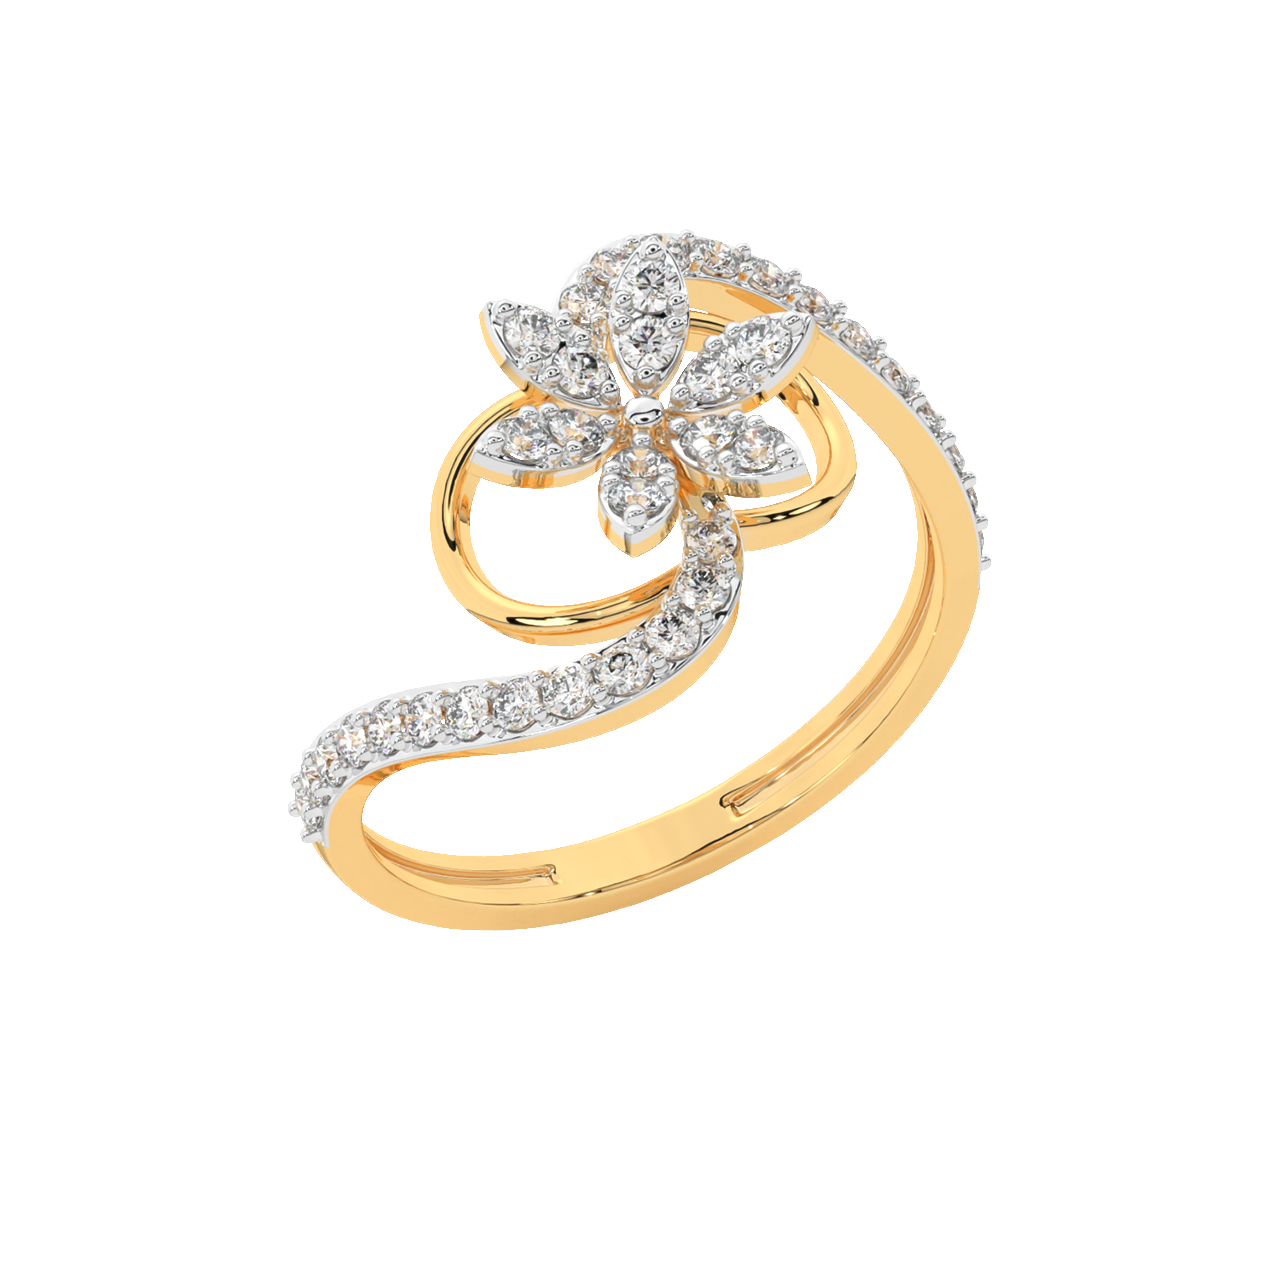 Aden Round Diamond Engagement Ring